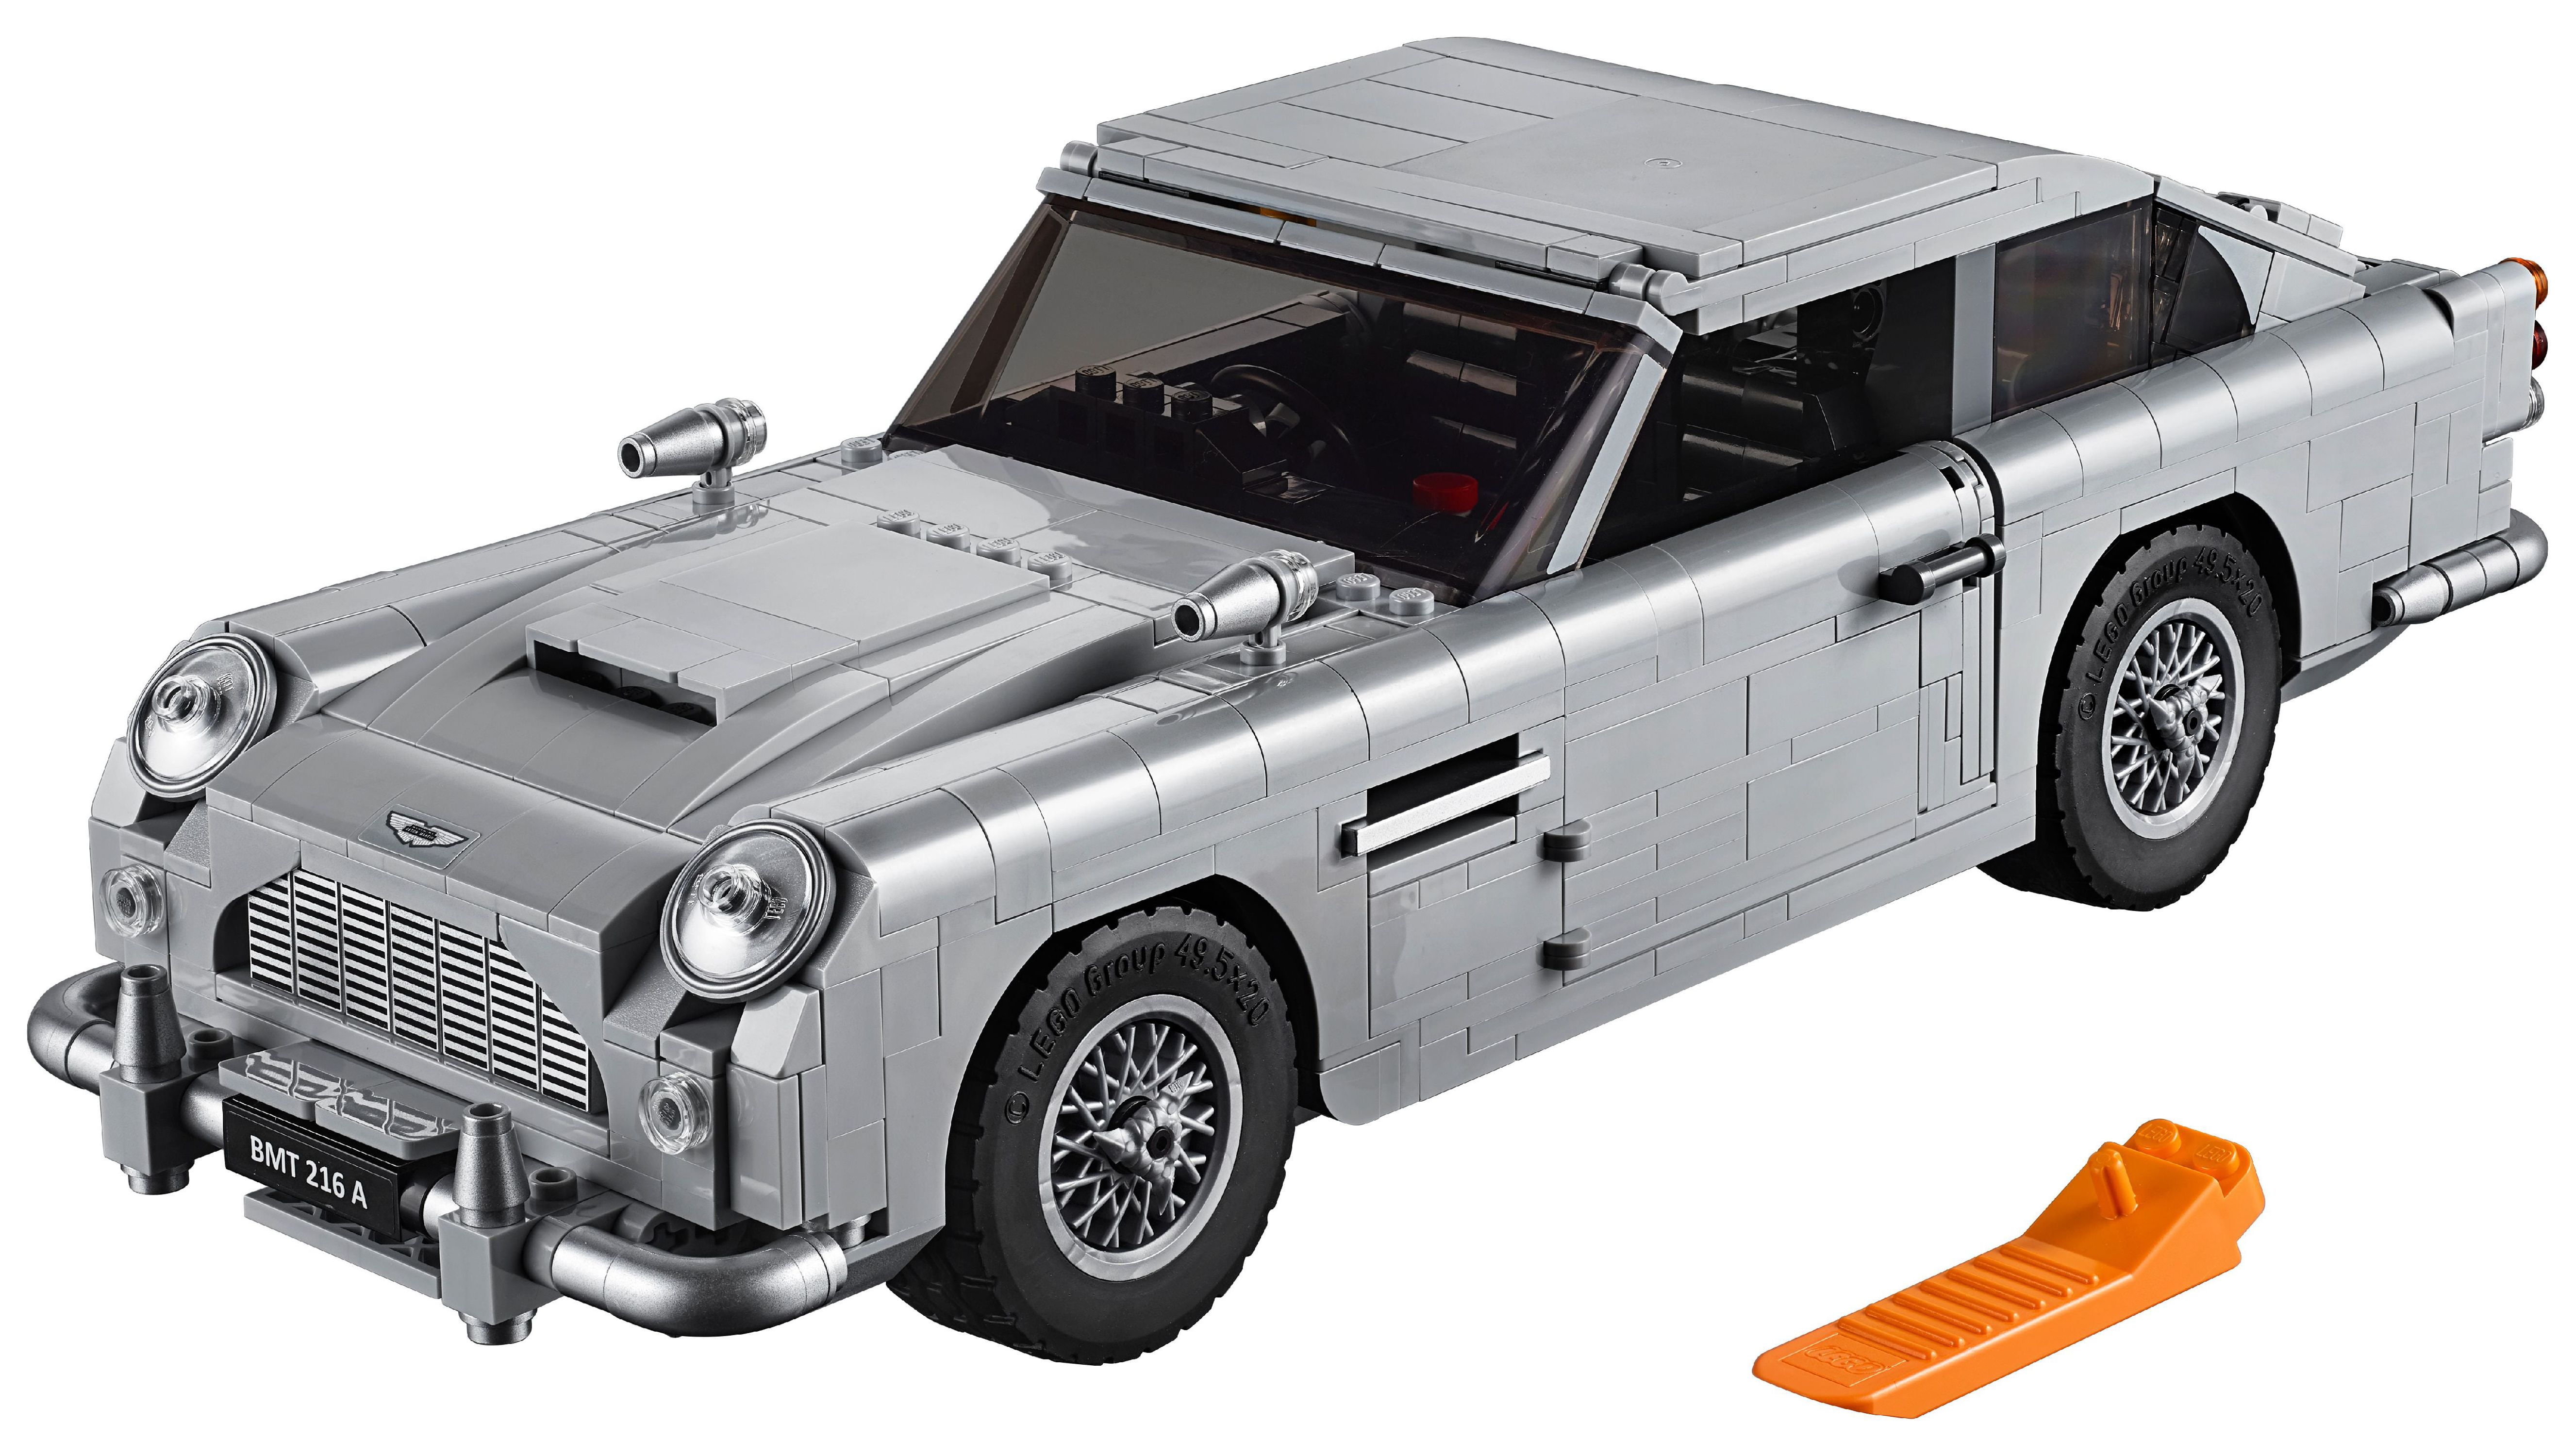 LEGO Creator Expert James Bond Aston Martin DB5 10262 - image 2 of 7